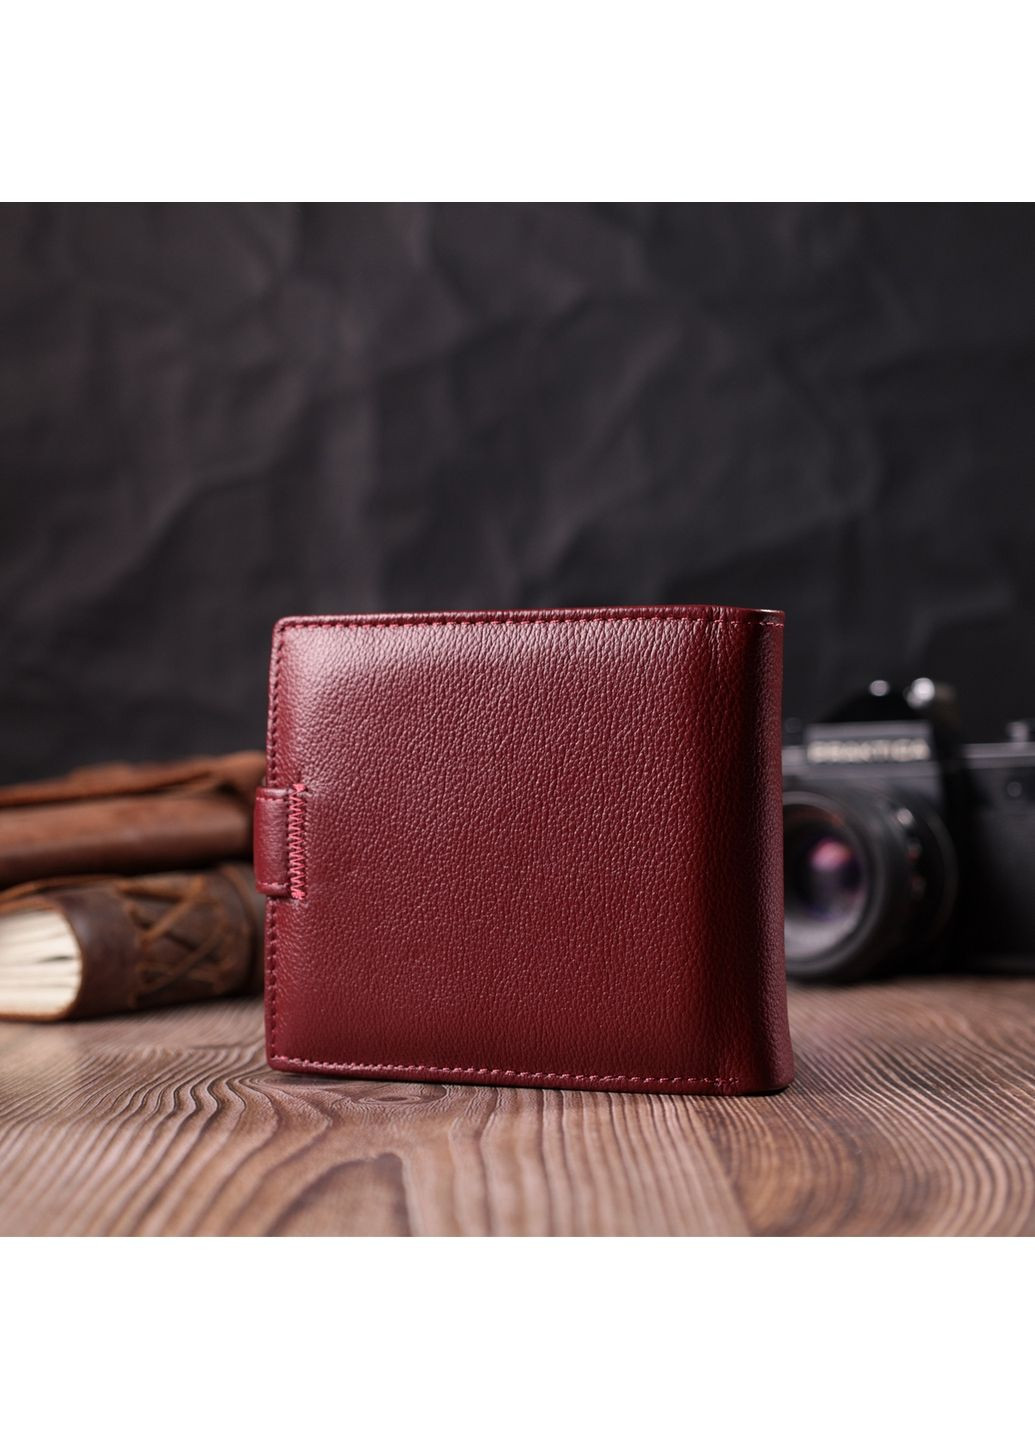 Кожаный женский бумажник st leather (288184934)